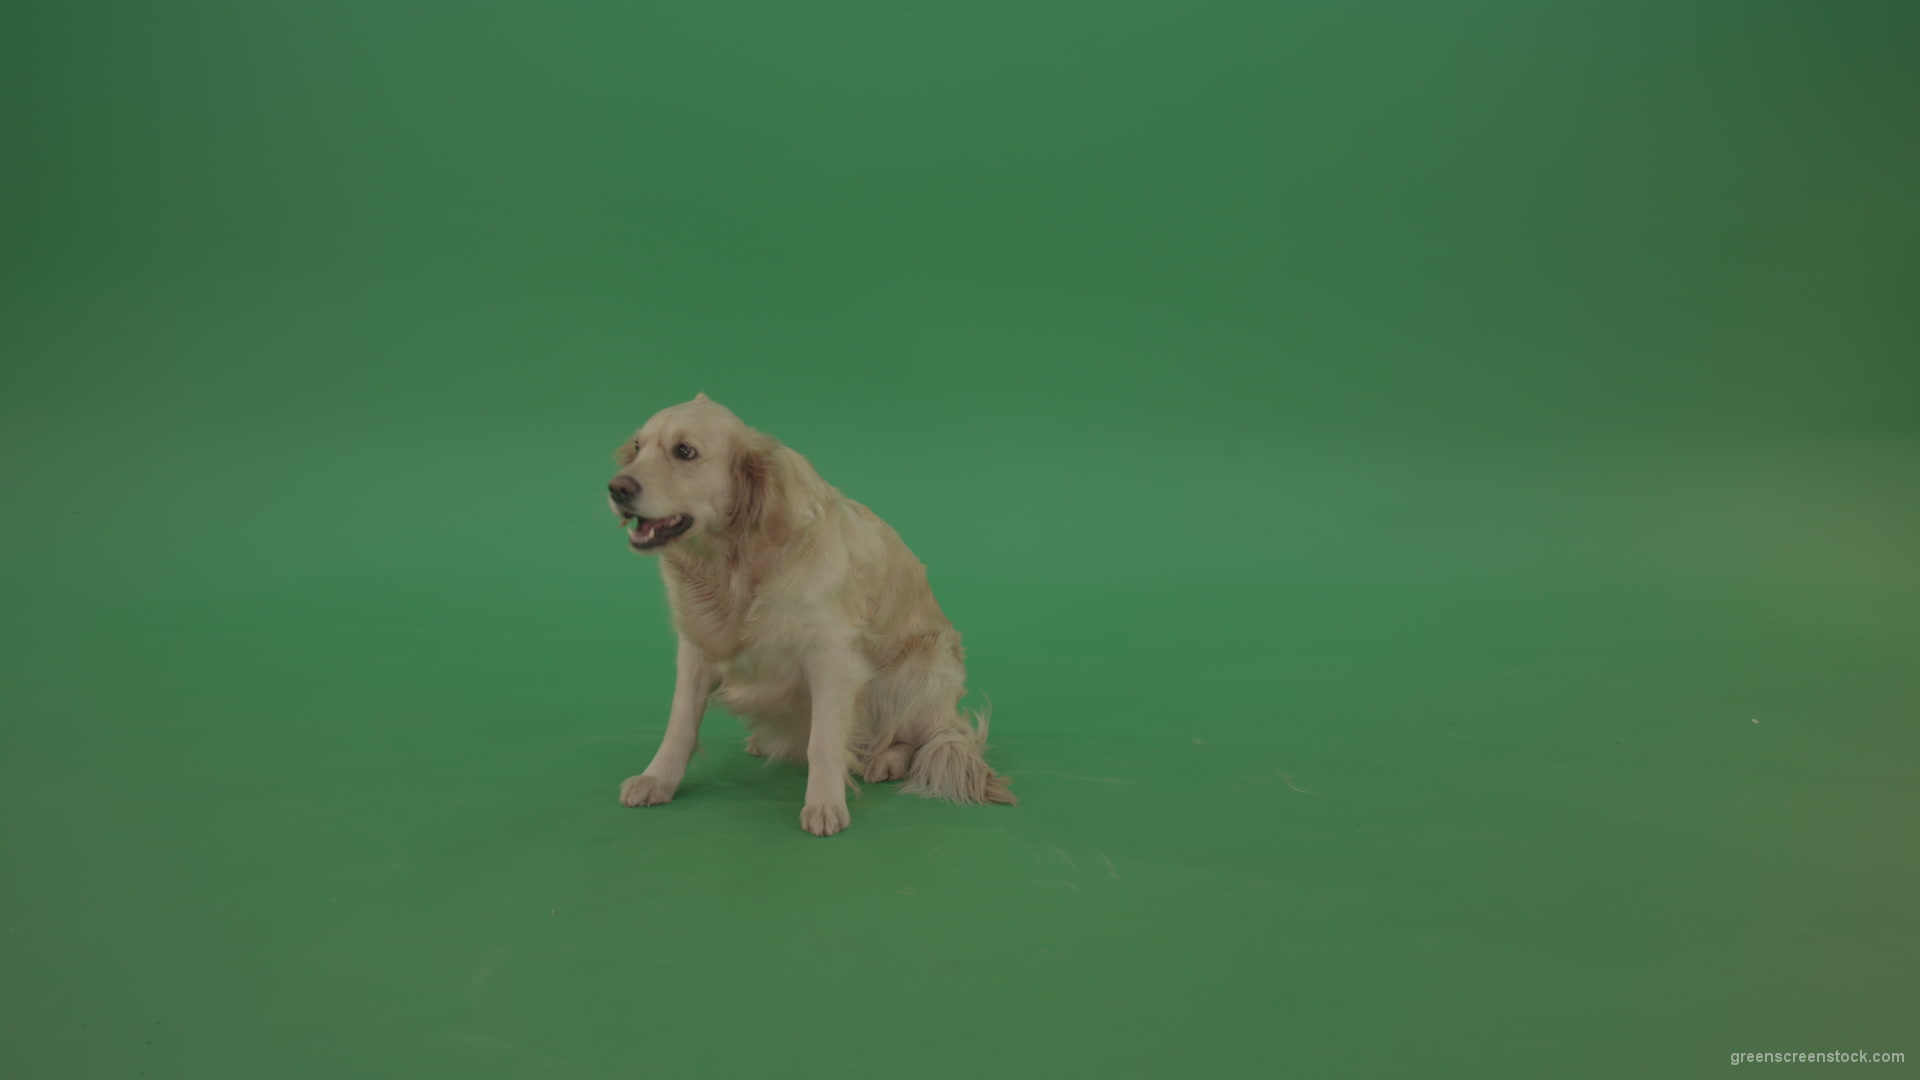 Golden-Retriever-Gun-Dog-sittin-and-eat-isolated-on-green-screen-4K-video-footage_008 Green Screen Stock